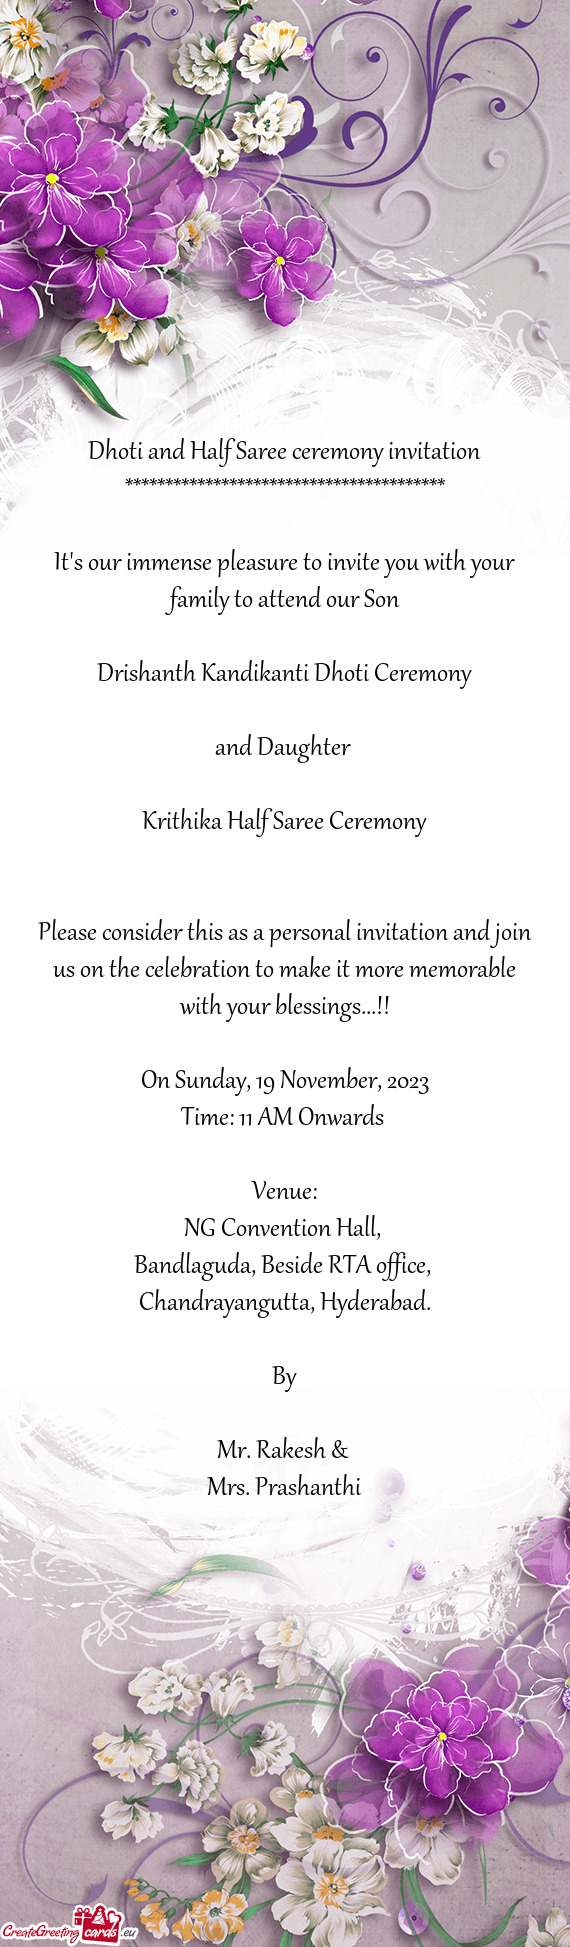 Krithika Half Saree Ceremony